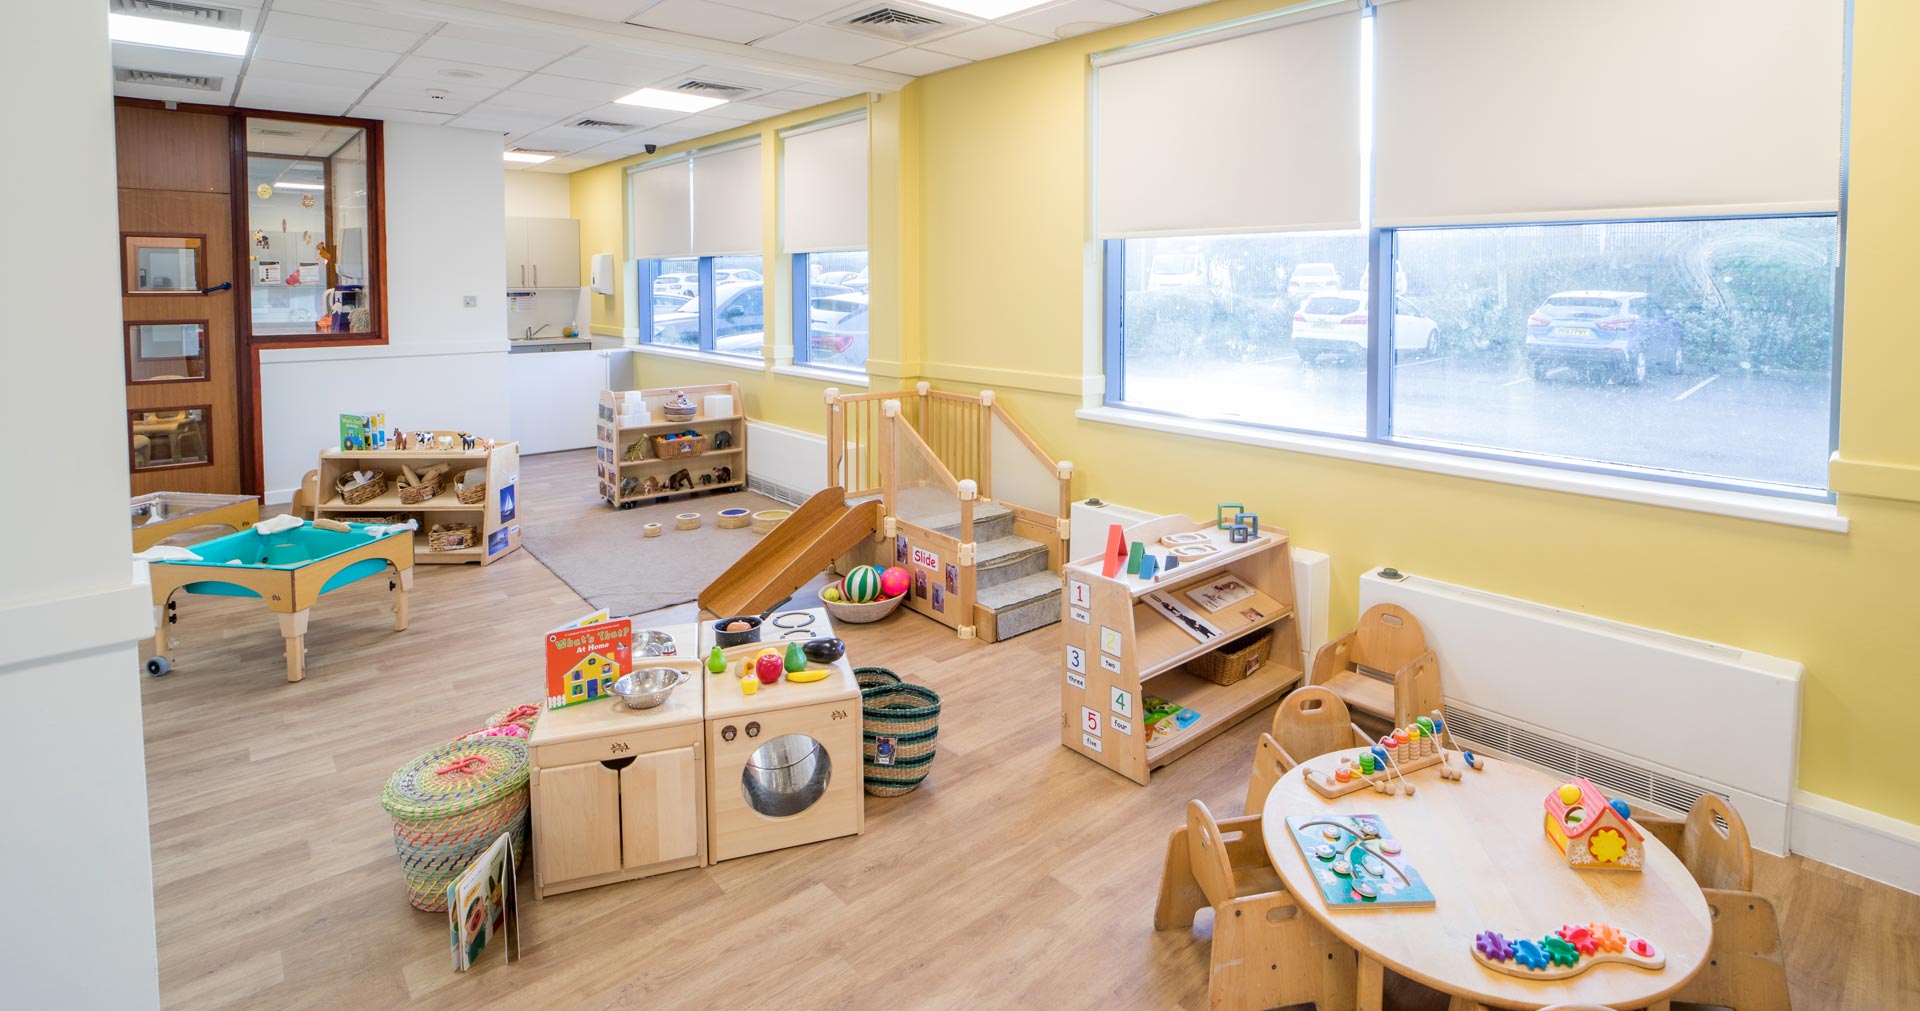 Bright Horizons Kirkby Day Nursery and Preschool